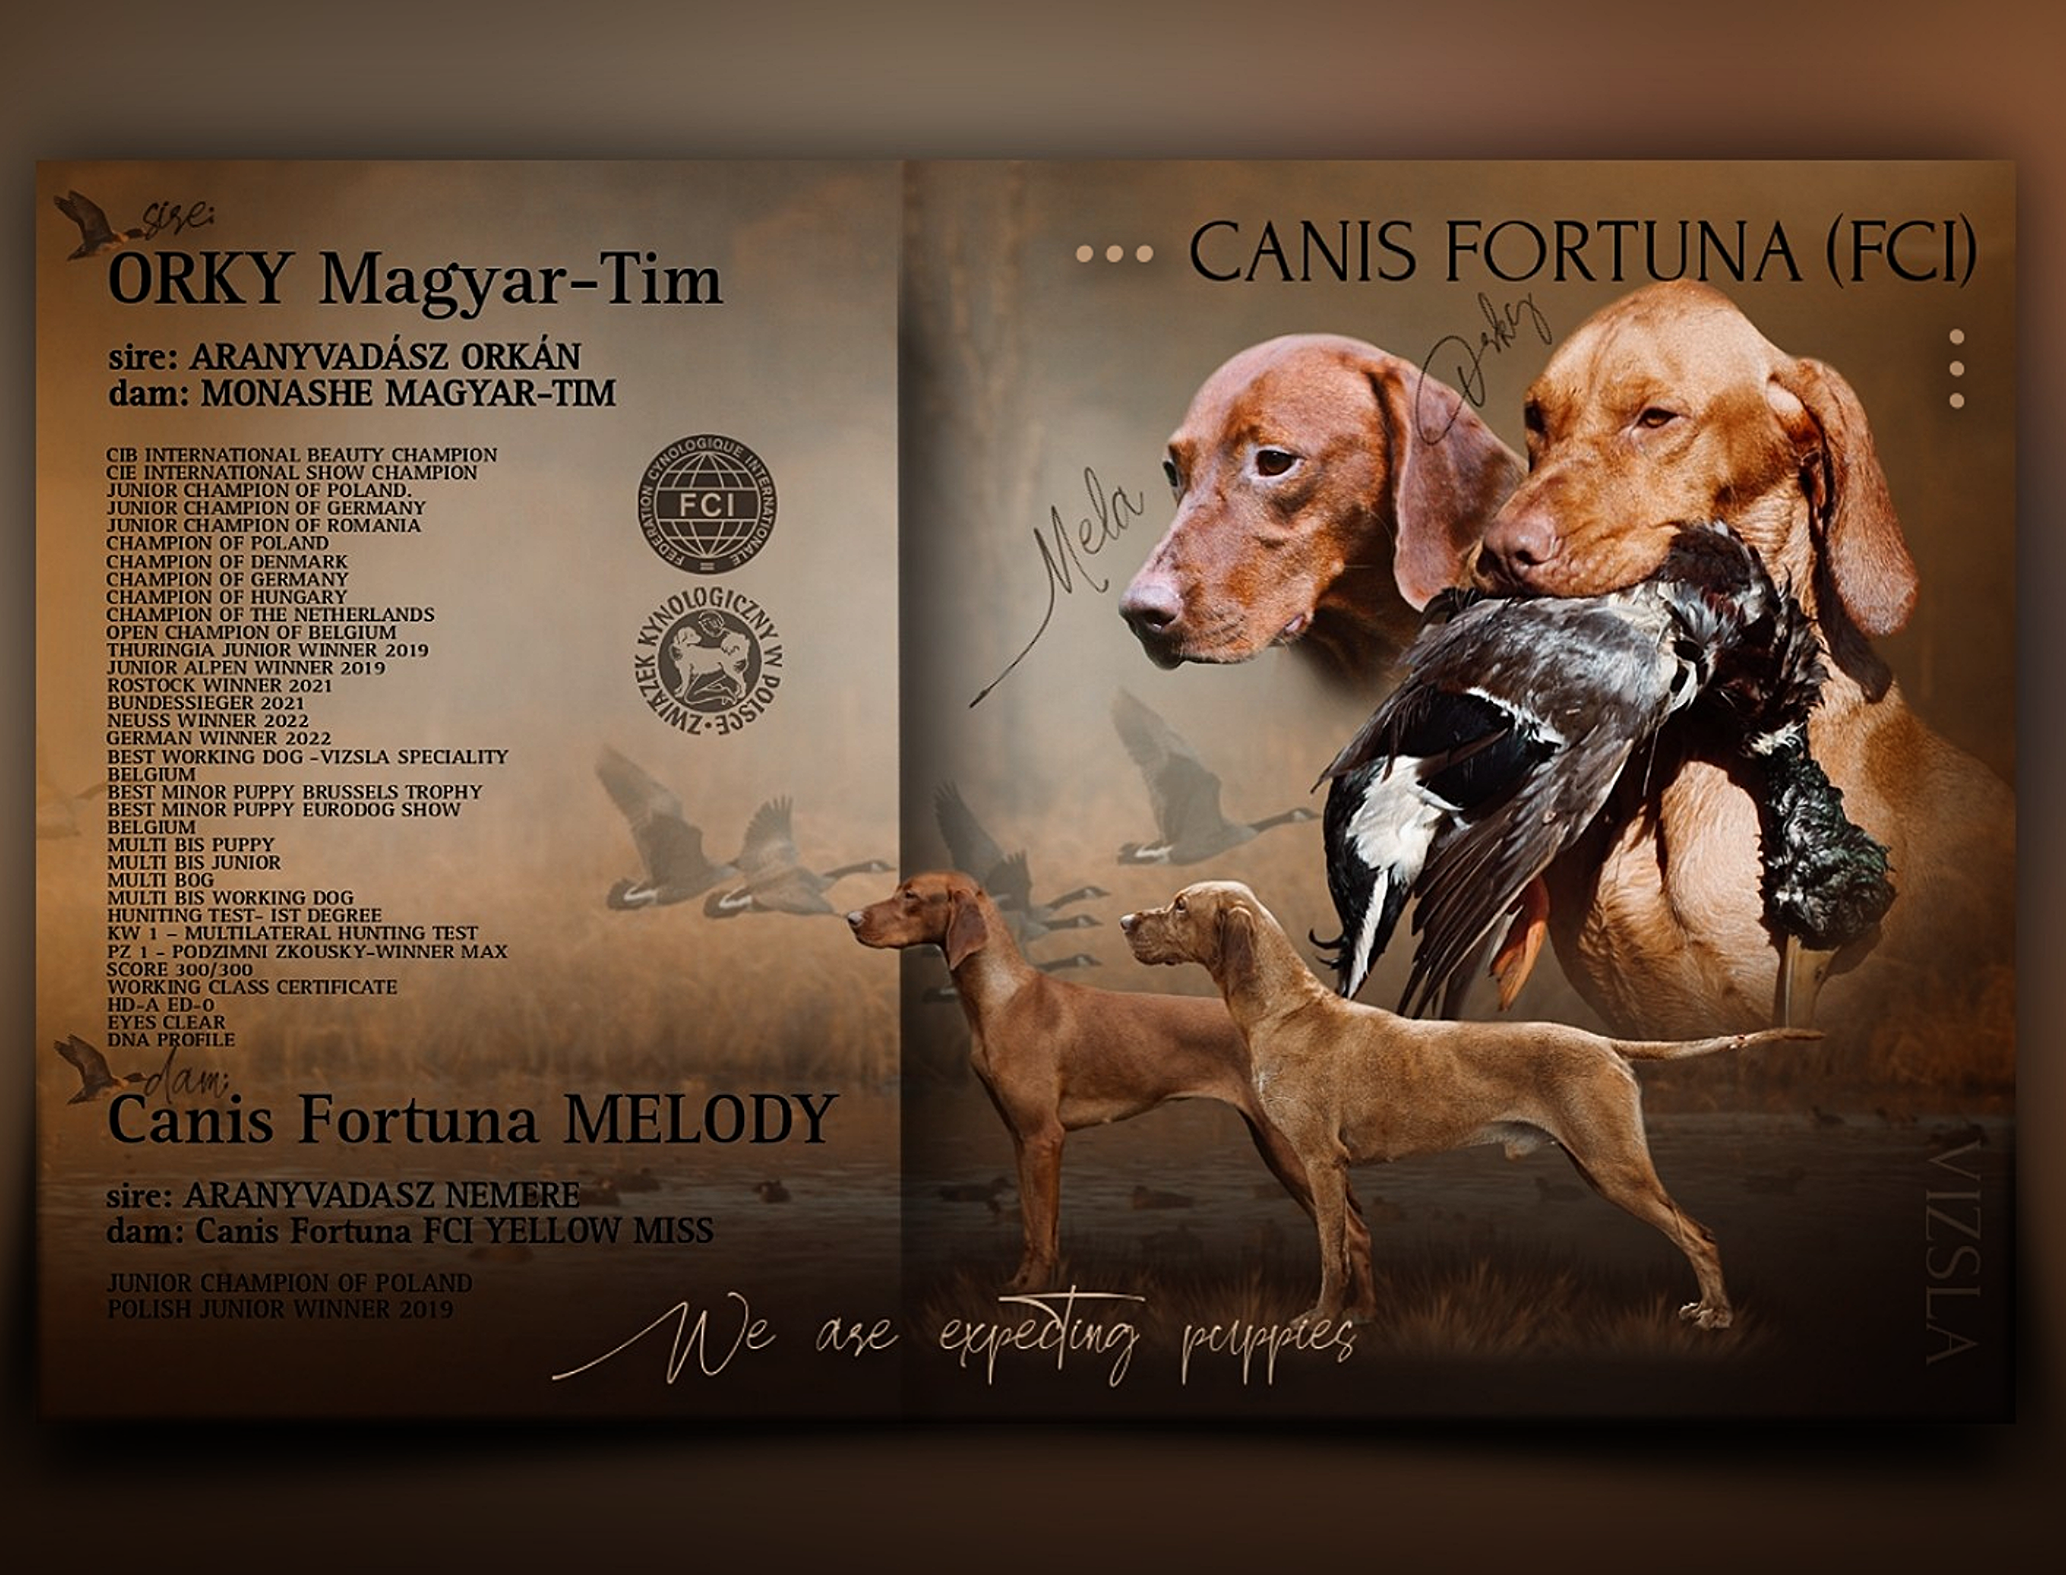 ORKY Magyar-Tim x Canis Fortuna MELODY